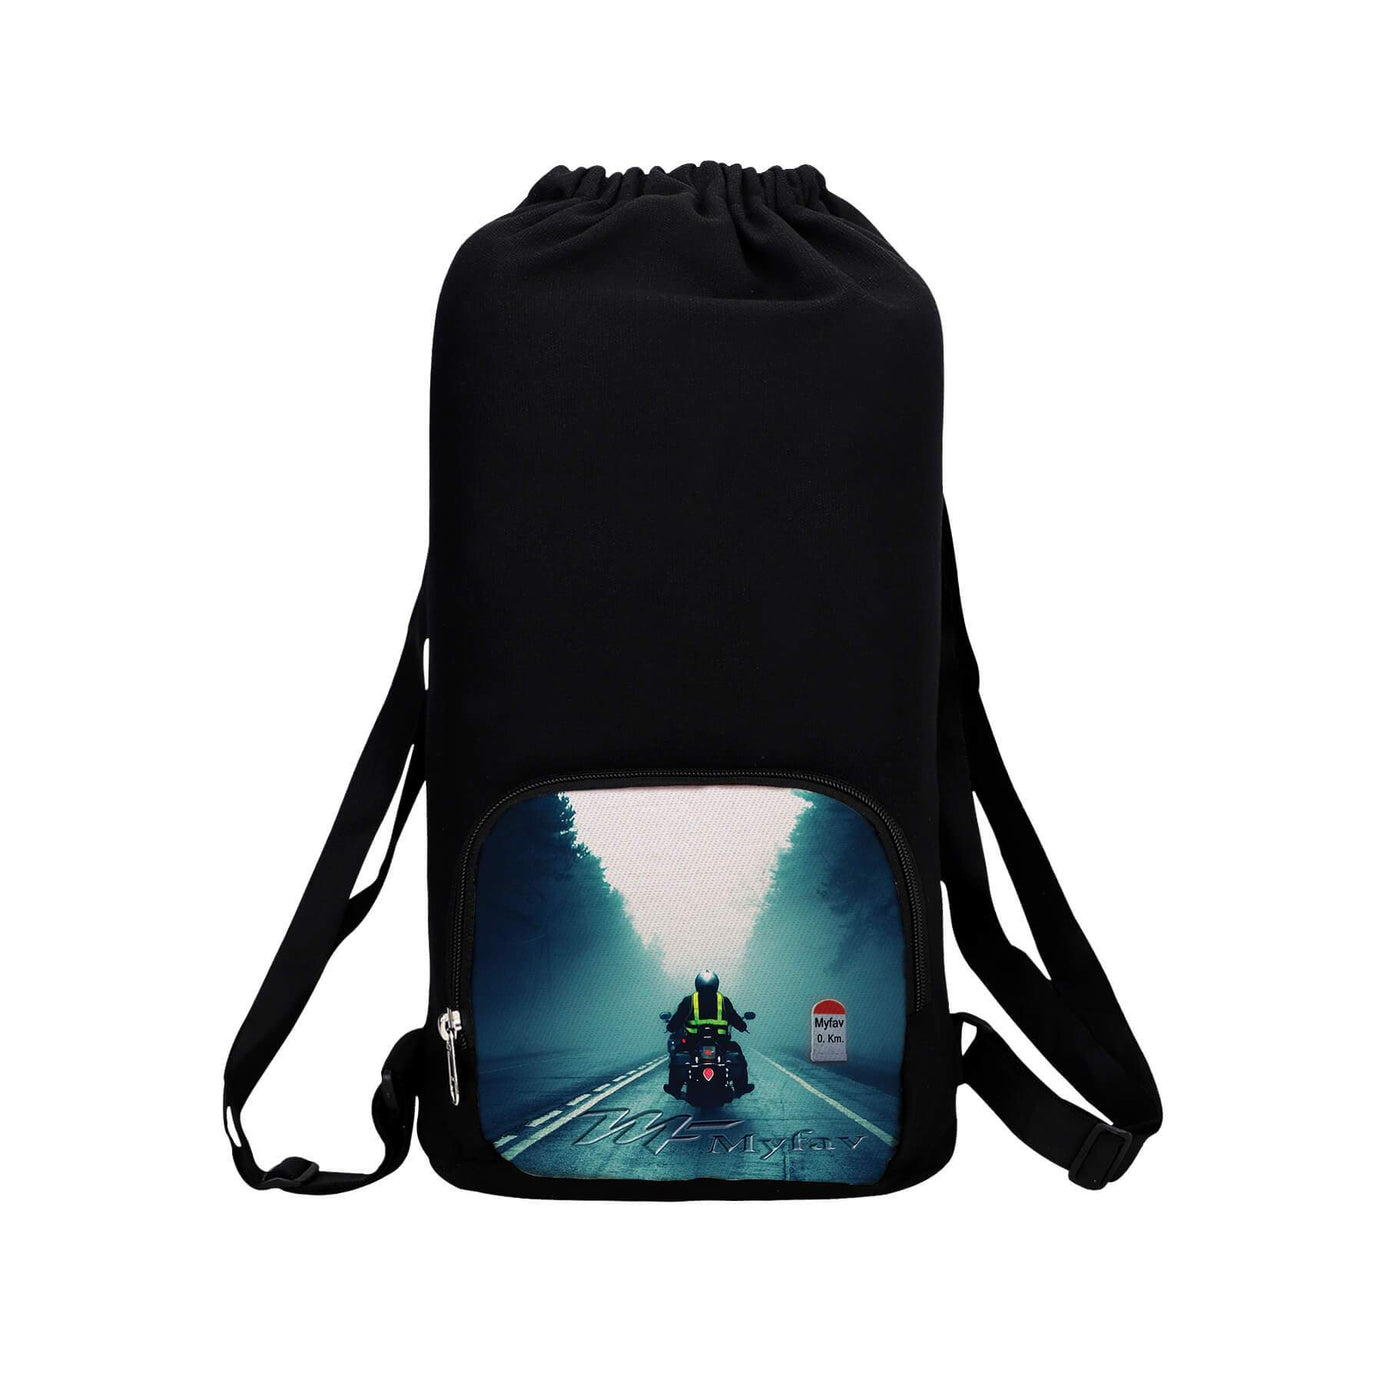 My Fav Rider Print Cotton Canvas Tution Backpack / Exam Bag For Boys / Girls